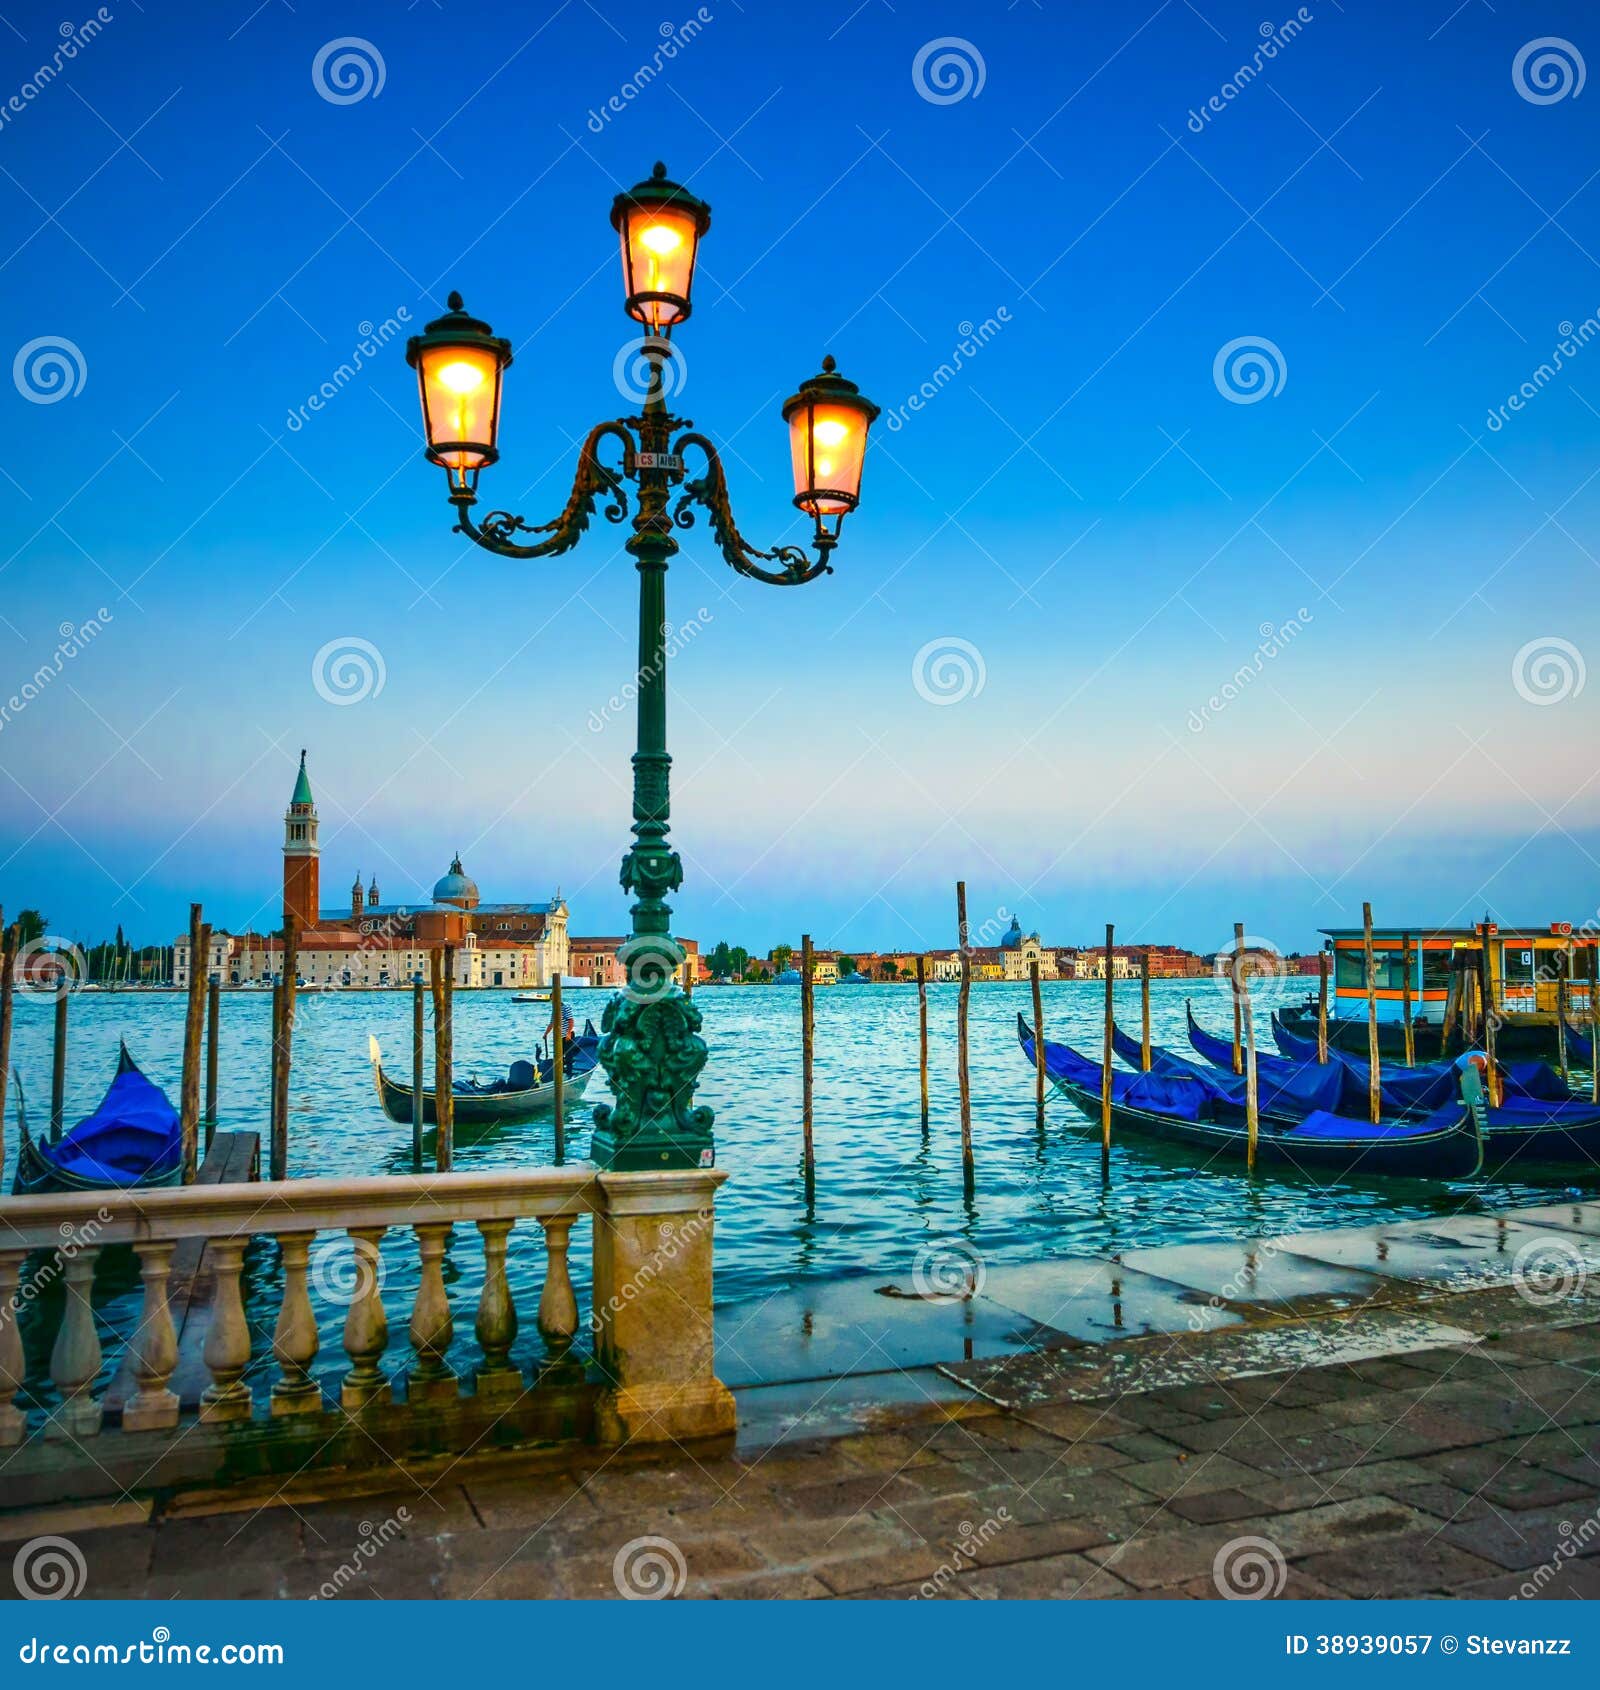 Venice, Street Lamp And Gondolas On Sunset. Italy Stock ...